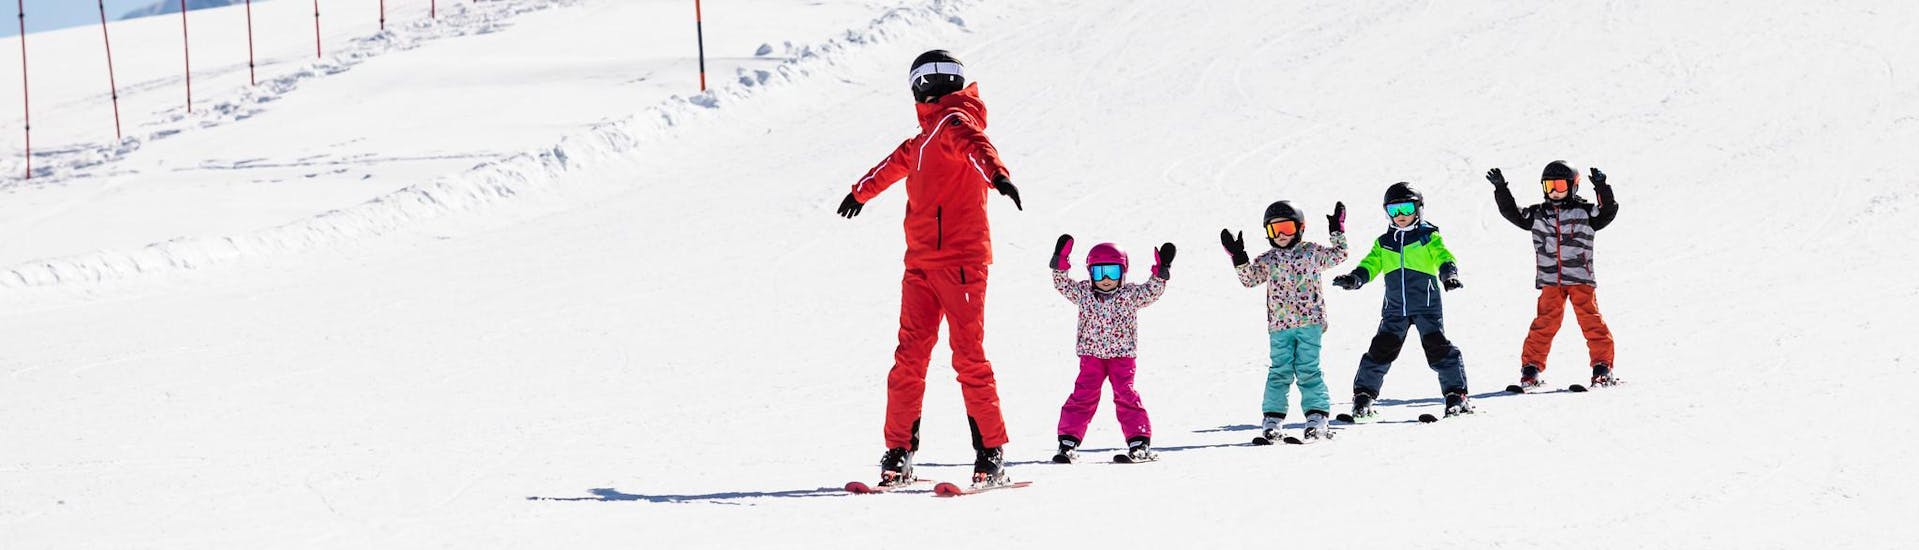 Ski instructor and kids enjoy a ski lesson with a ski school near Zurich.